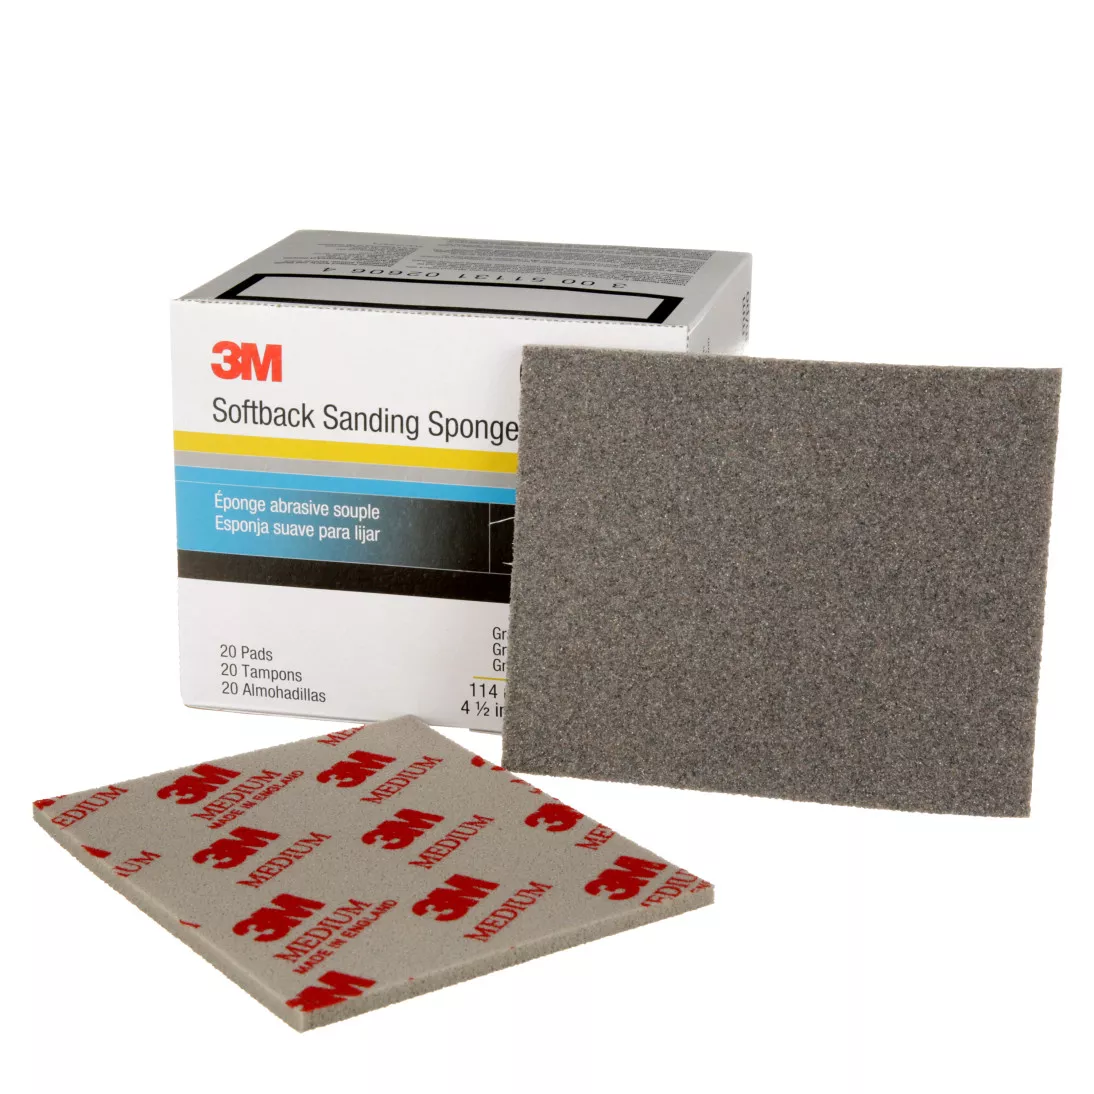 3M™ Softback Sanding Sponge, 02606, 4-1/2 in x 5-1/2 in,  (115mm x
140mm), Medium, 20 sponges per pack 6 packs per case